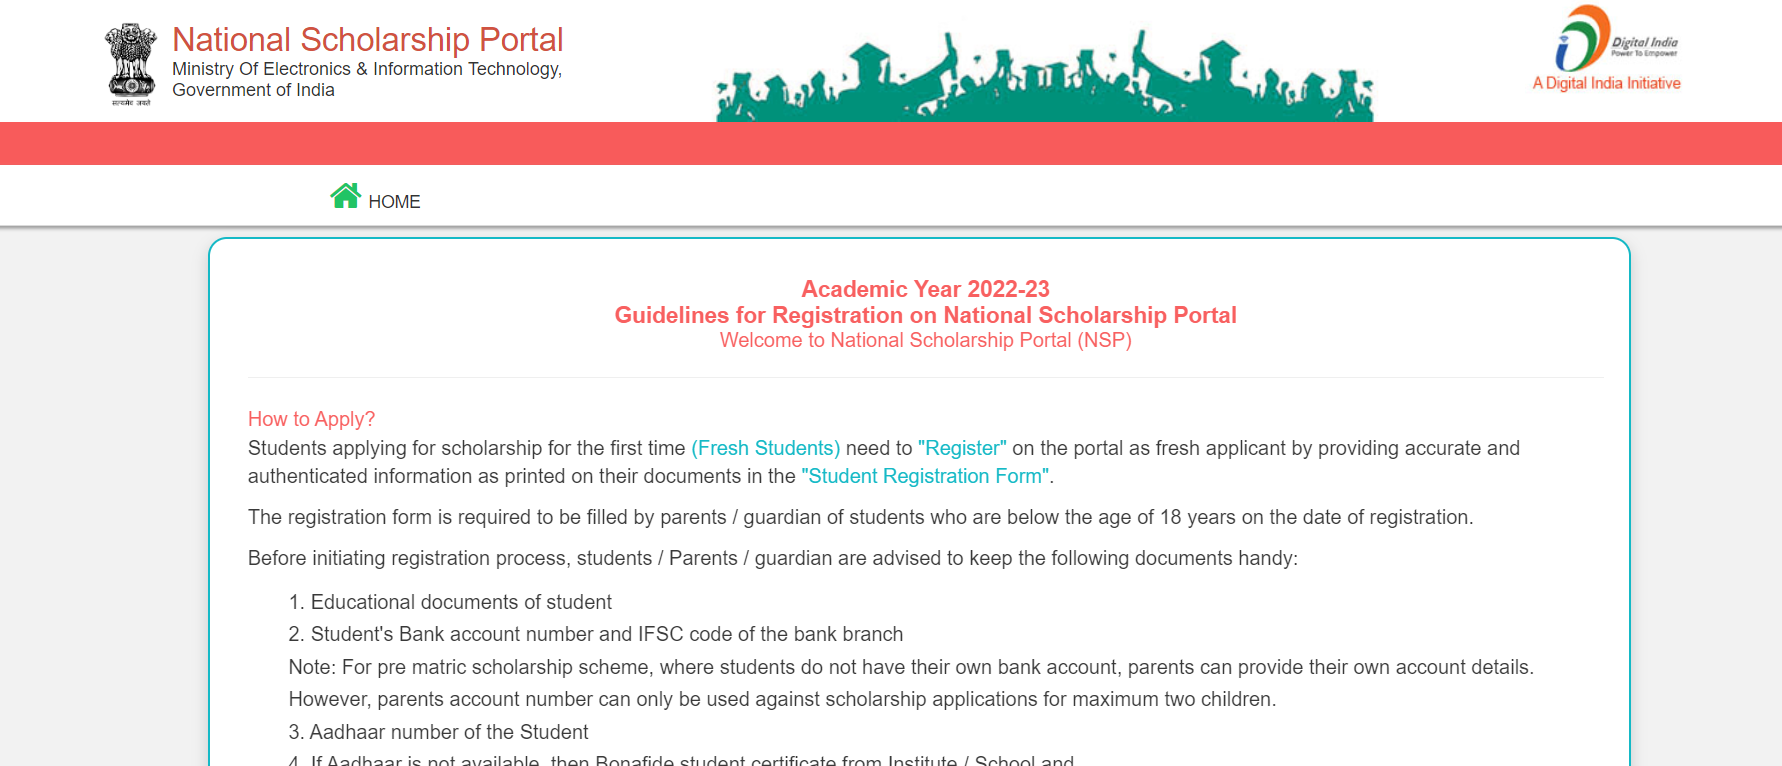 National Scholarship Portal Guidelines